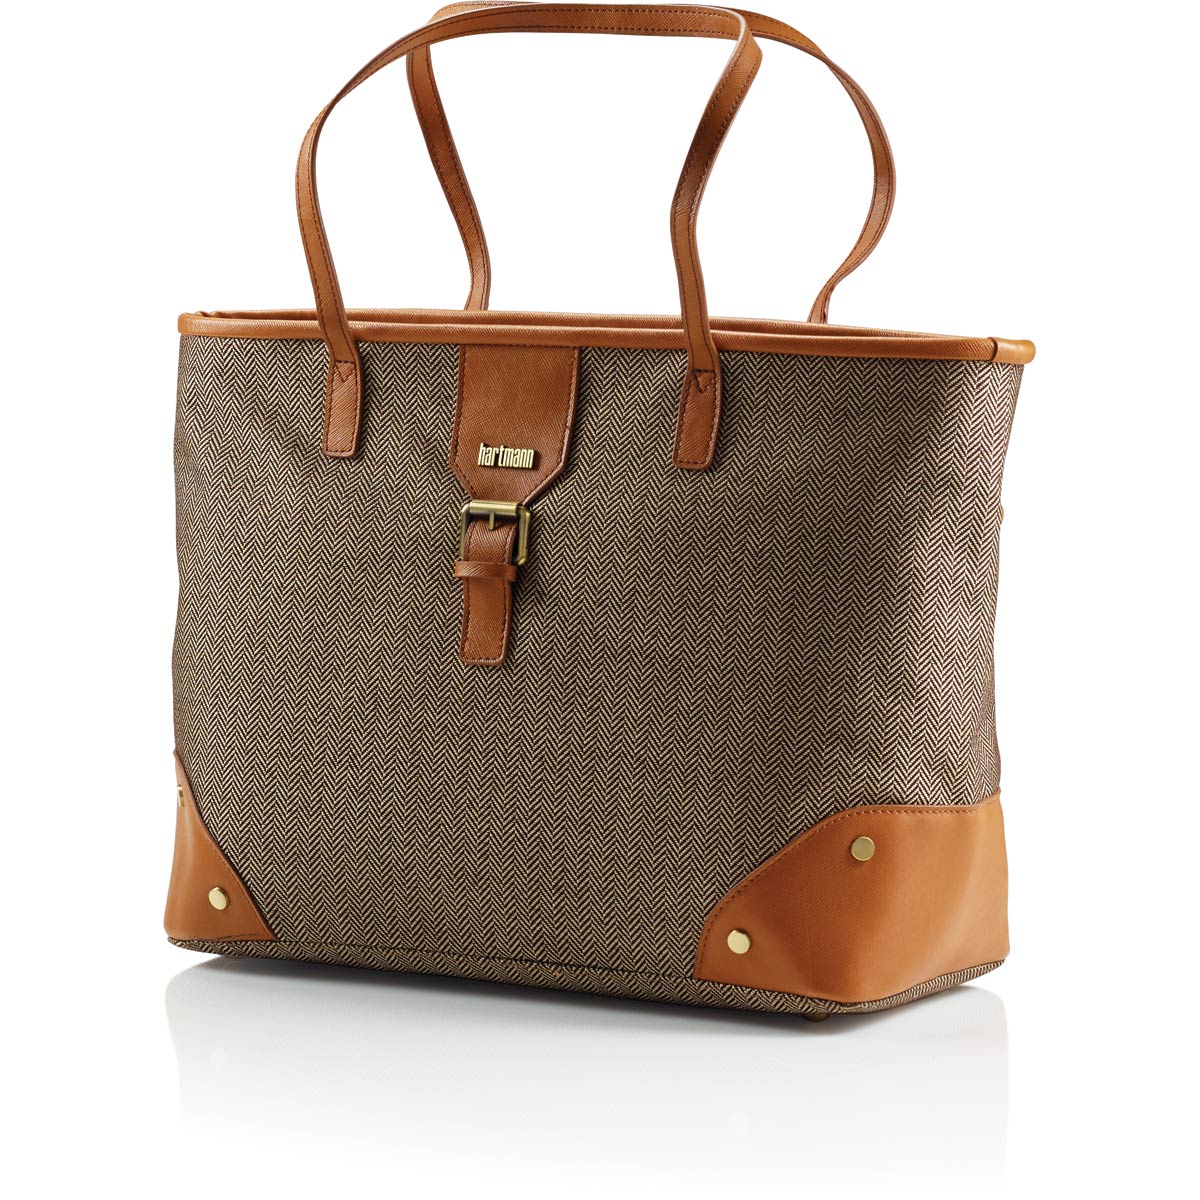 Shop Hartmann Herringbone Luxe Shoulder Bag – Luggage Factory